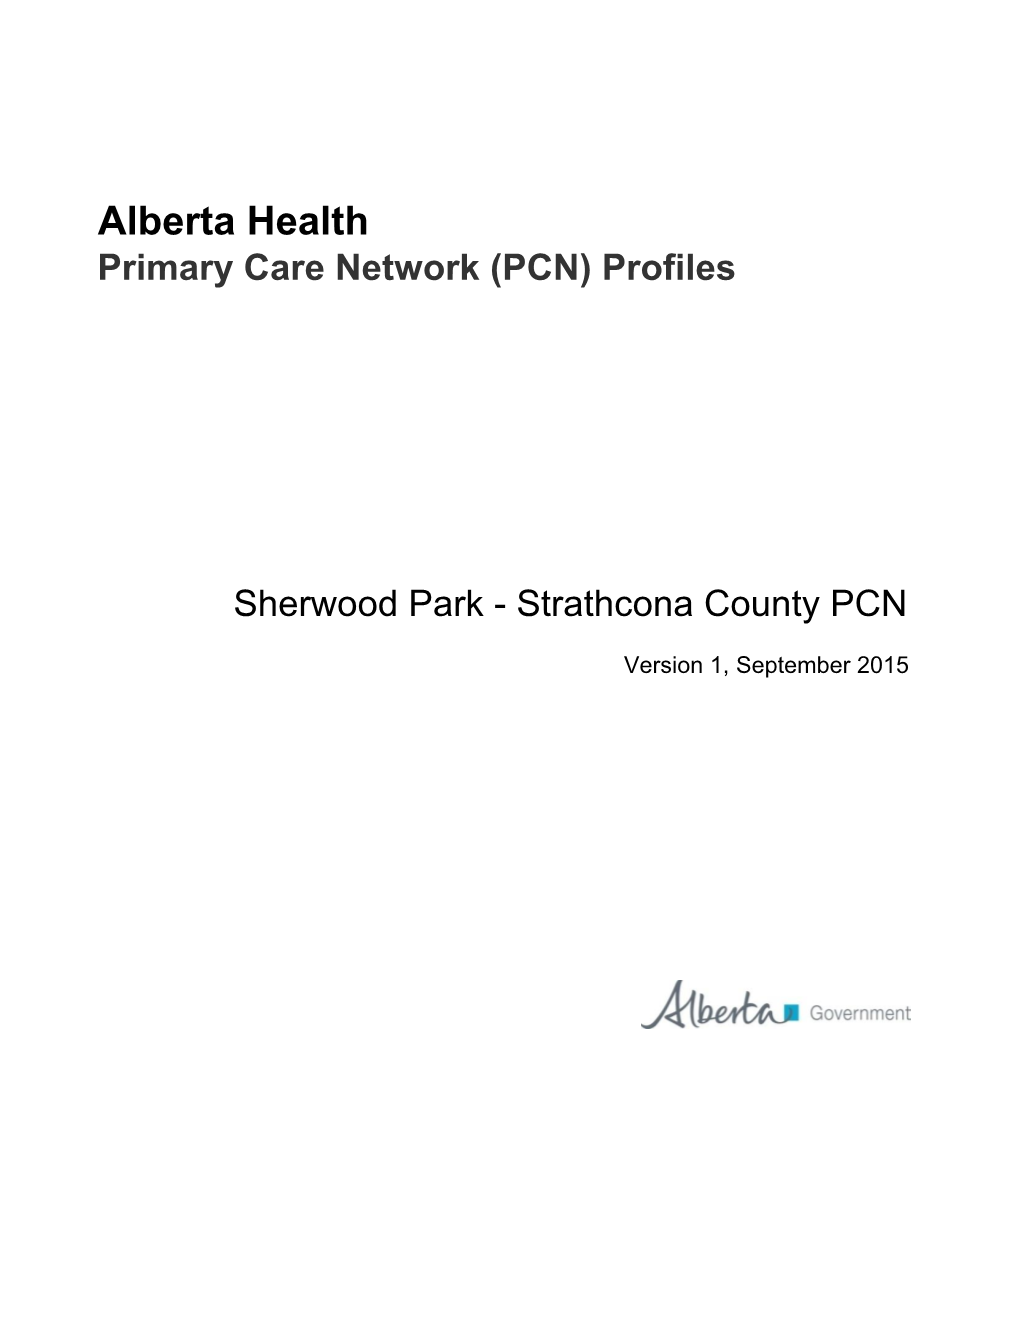 Sherwood Park - Strathcona County PCN